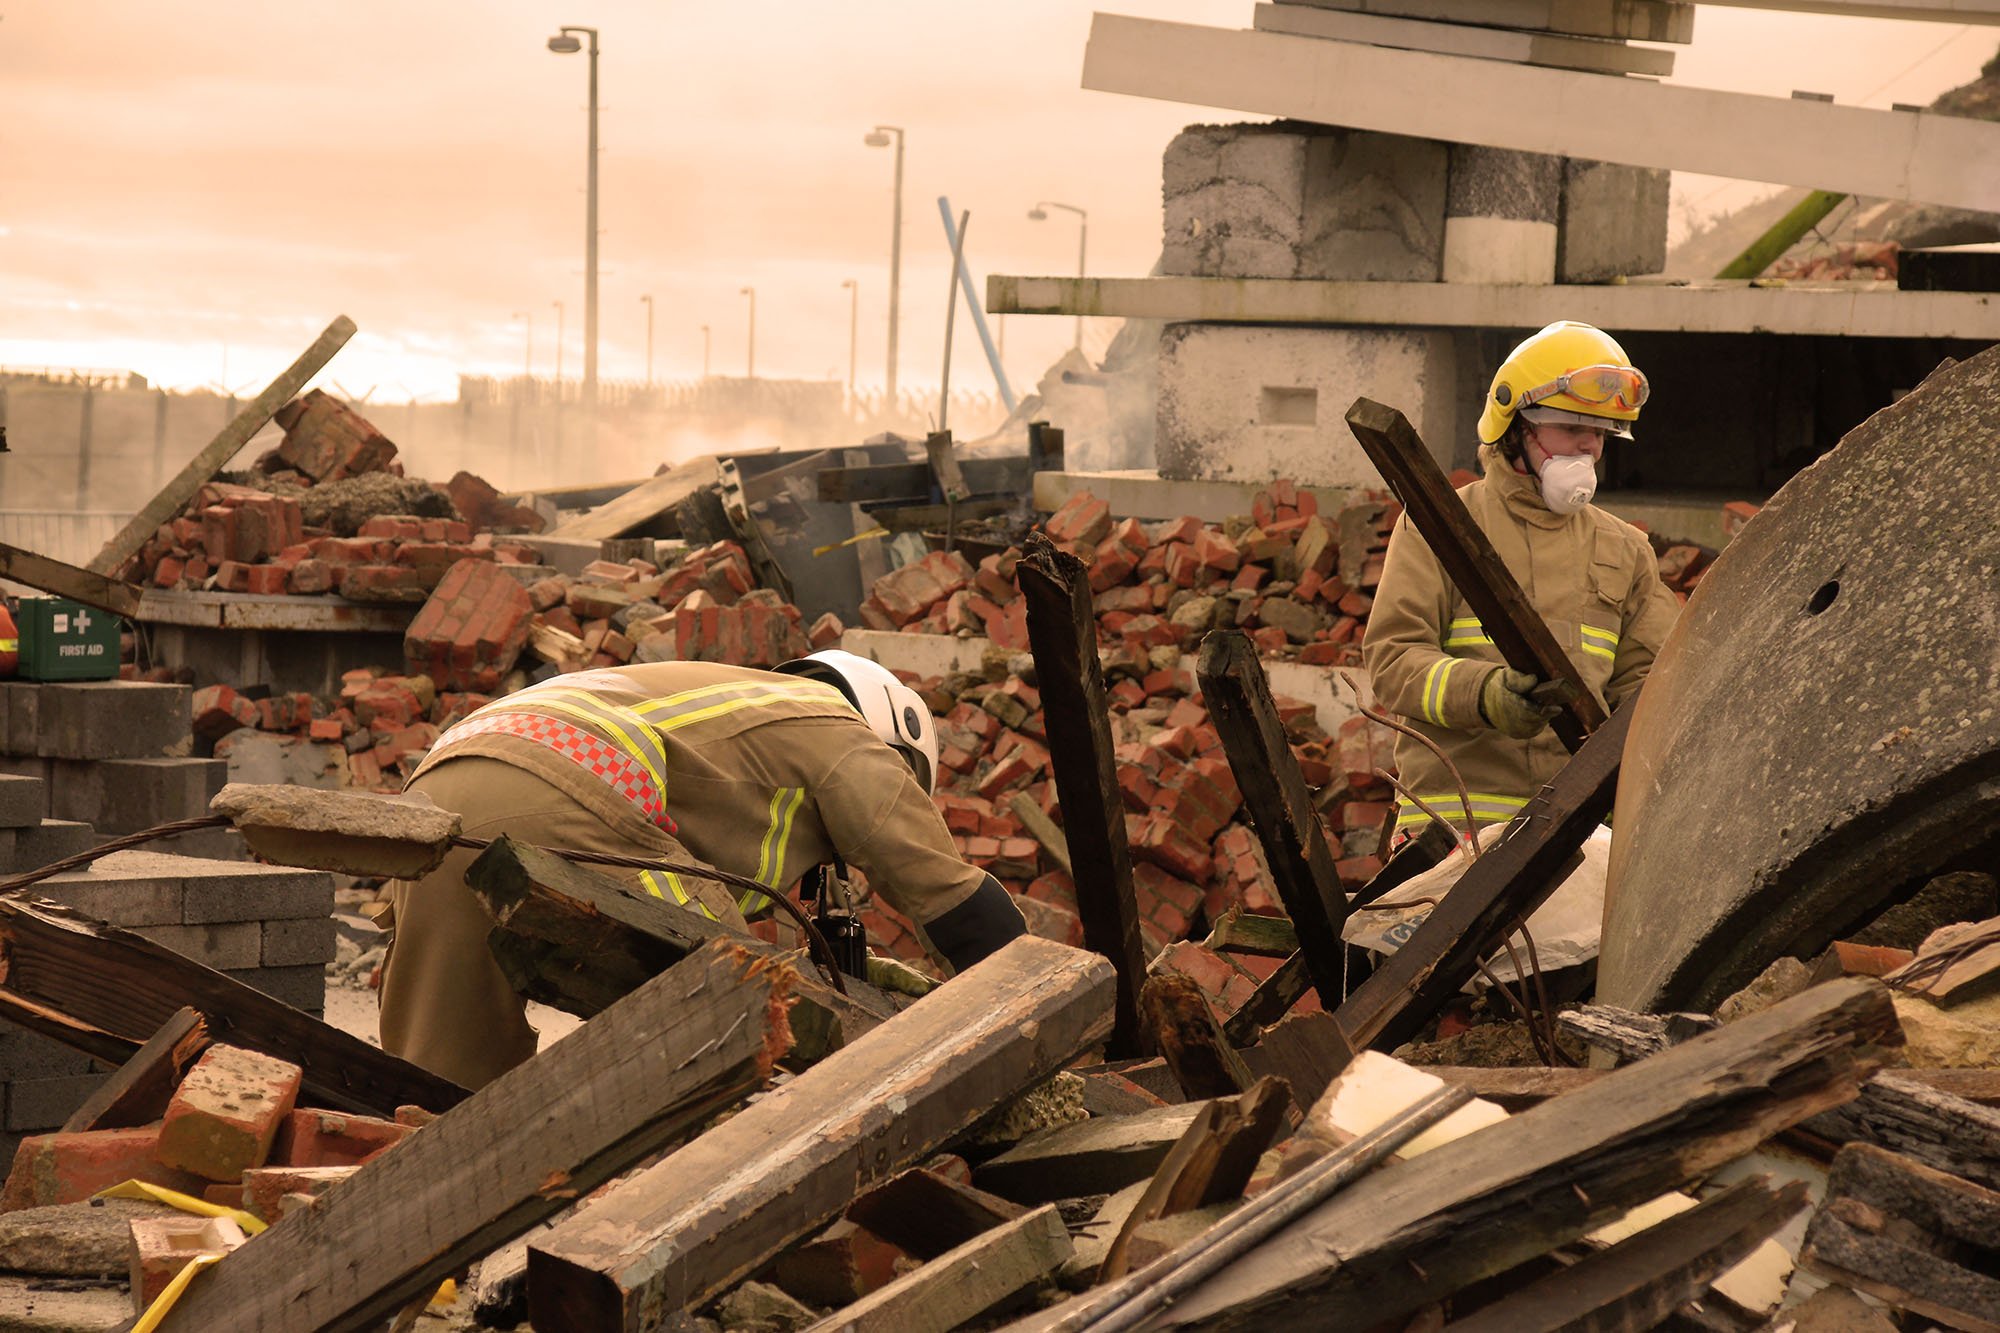 Bomberos escarbando escombros luego de un terremoto